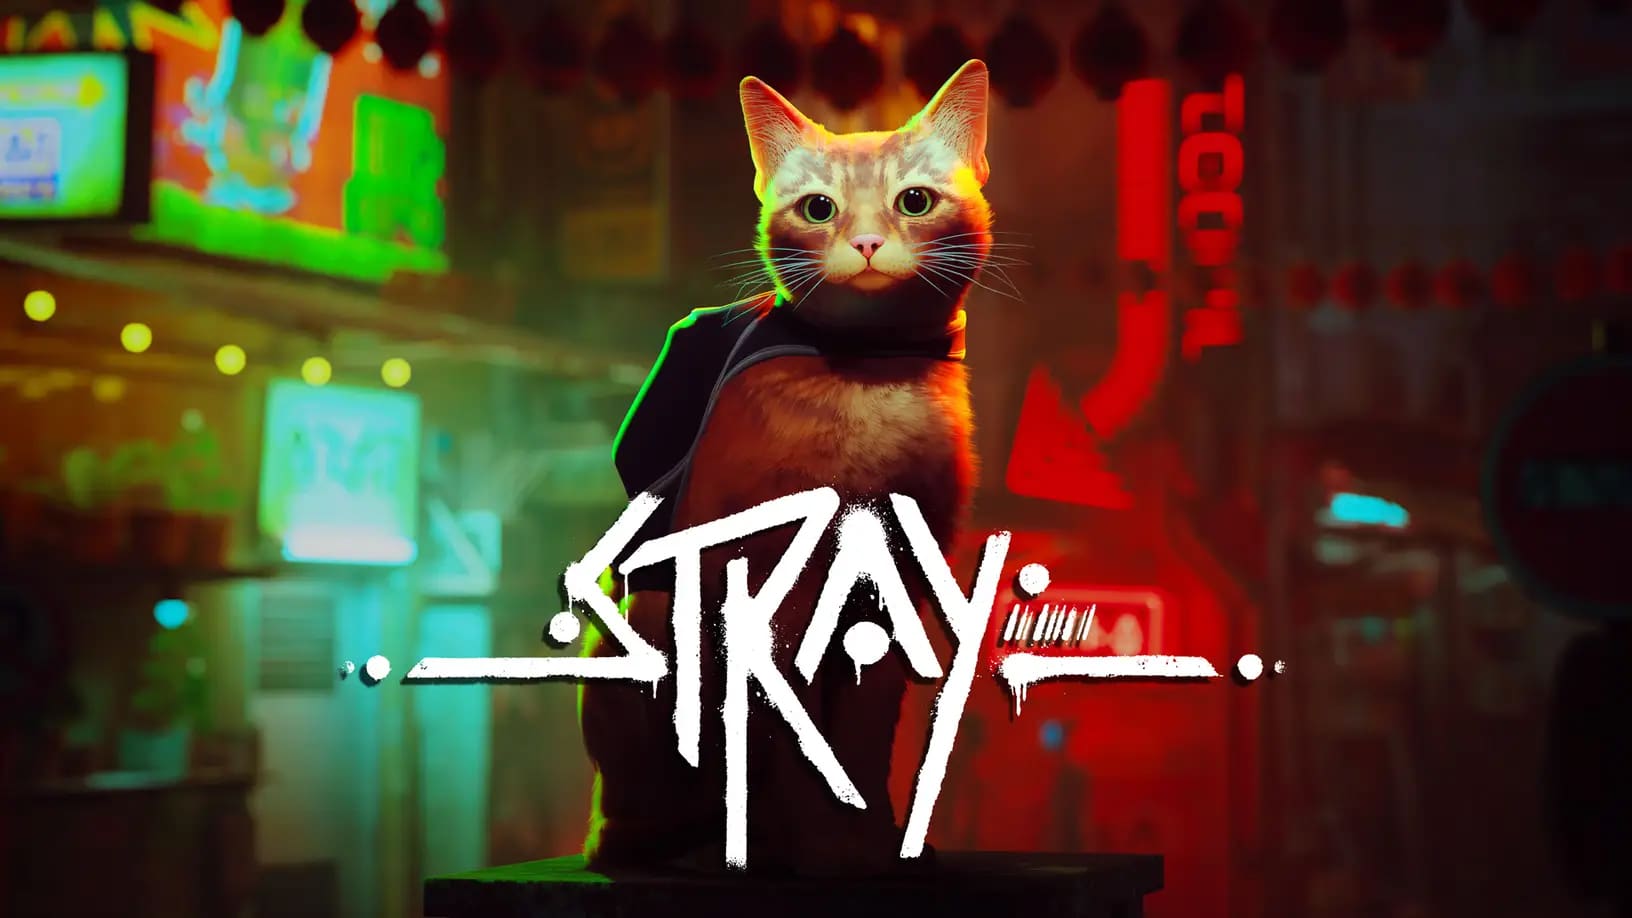 STRAY  Launch Trailer 